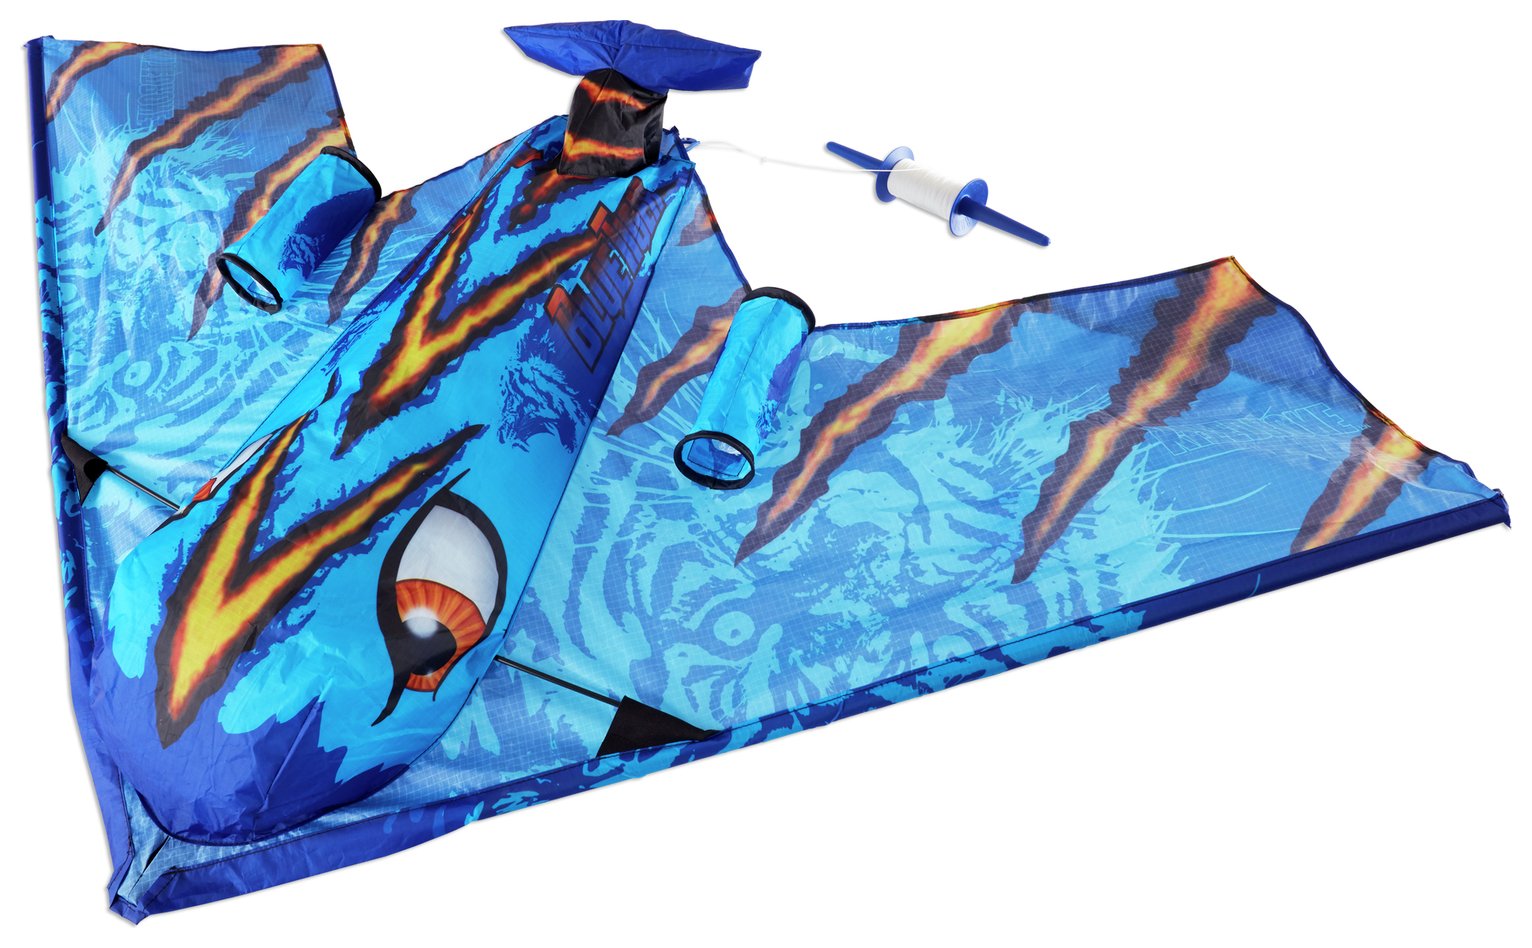 Kite Drone Aircraft - Blue Tiger